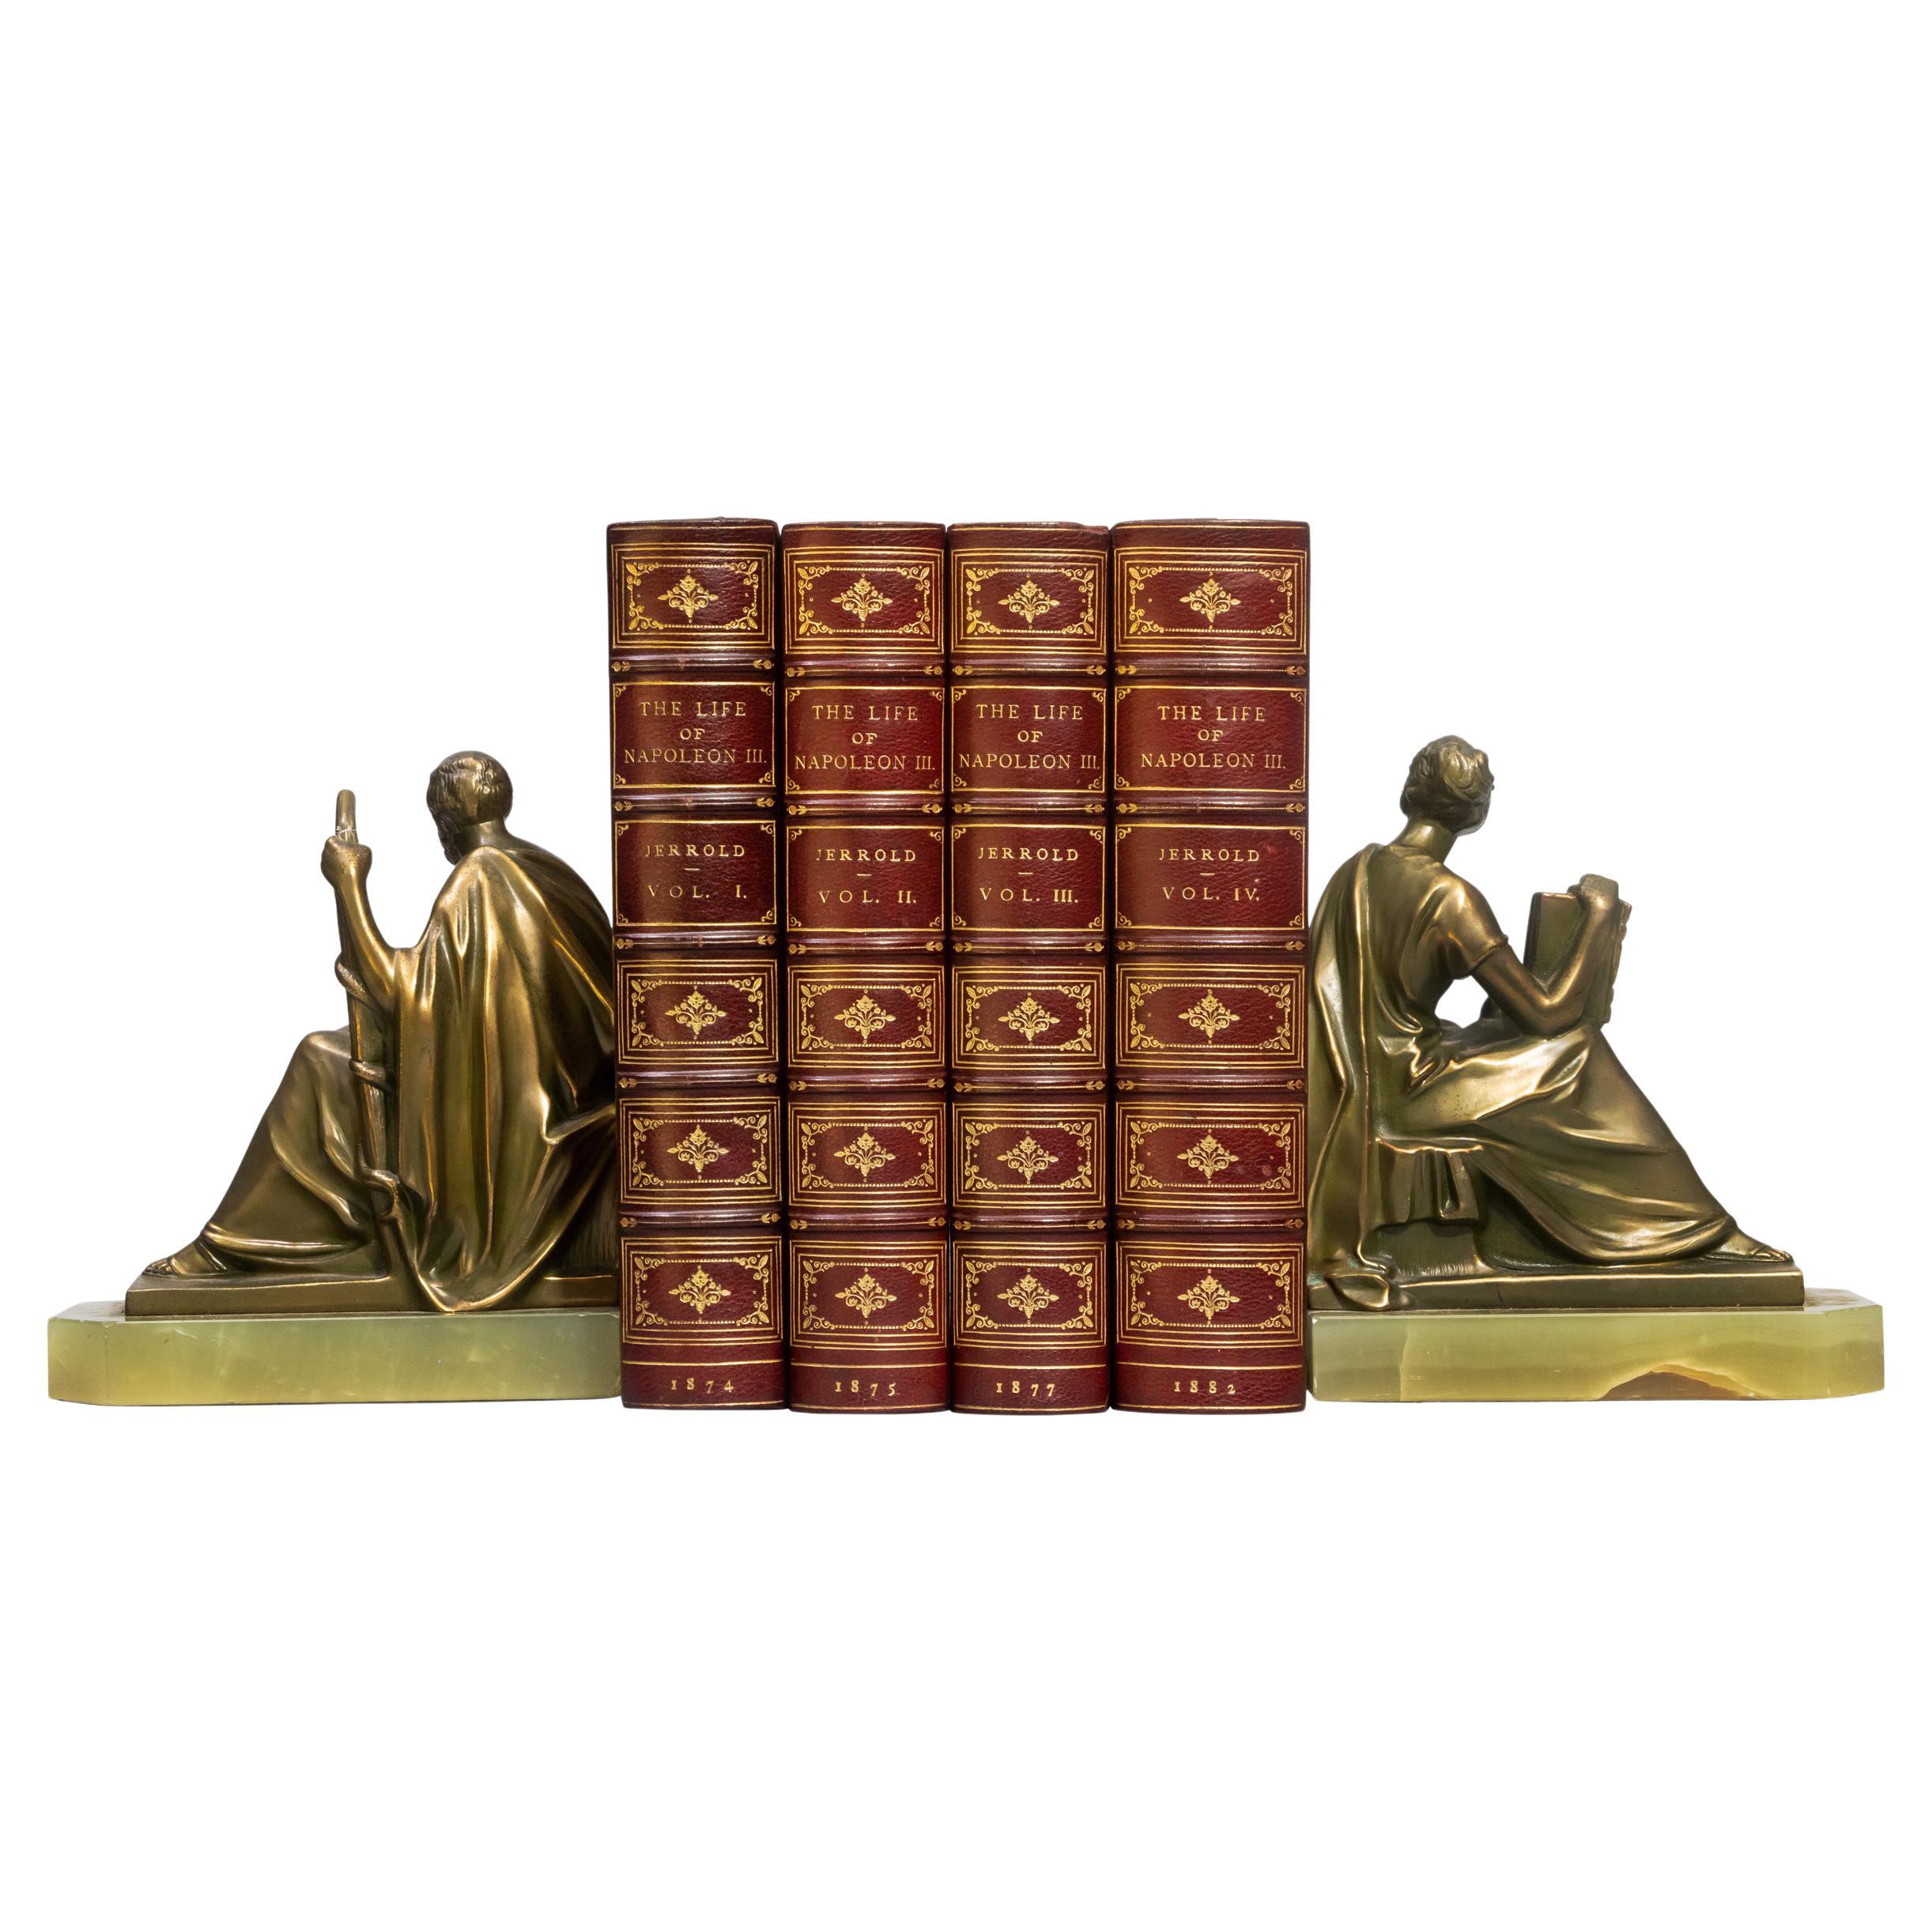 4 Volumes. Blanchard Jerrold, The Life of Napoleon III